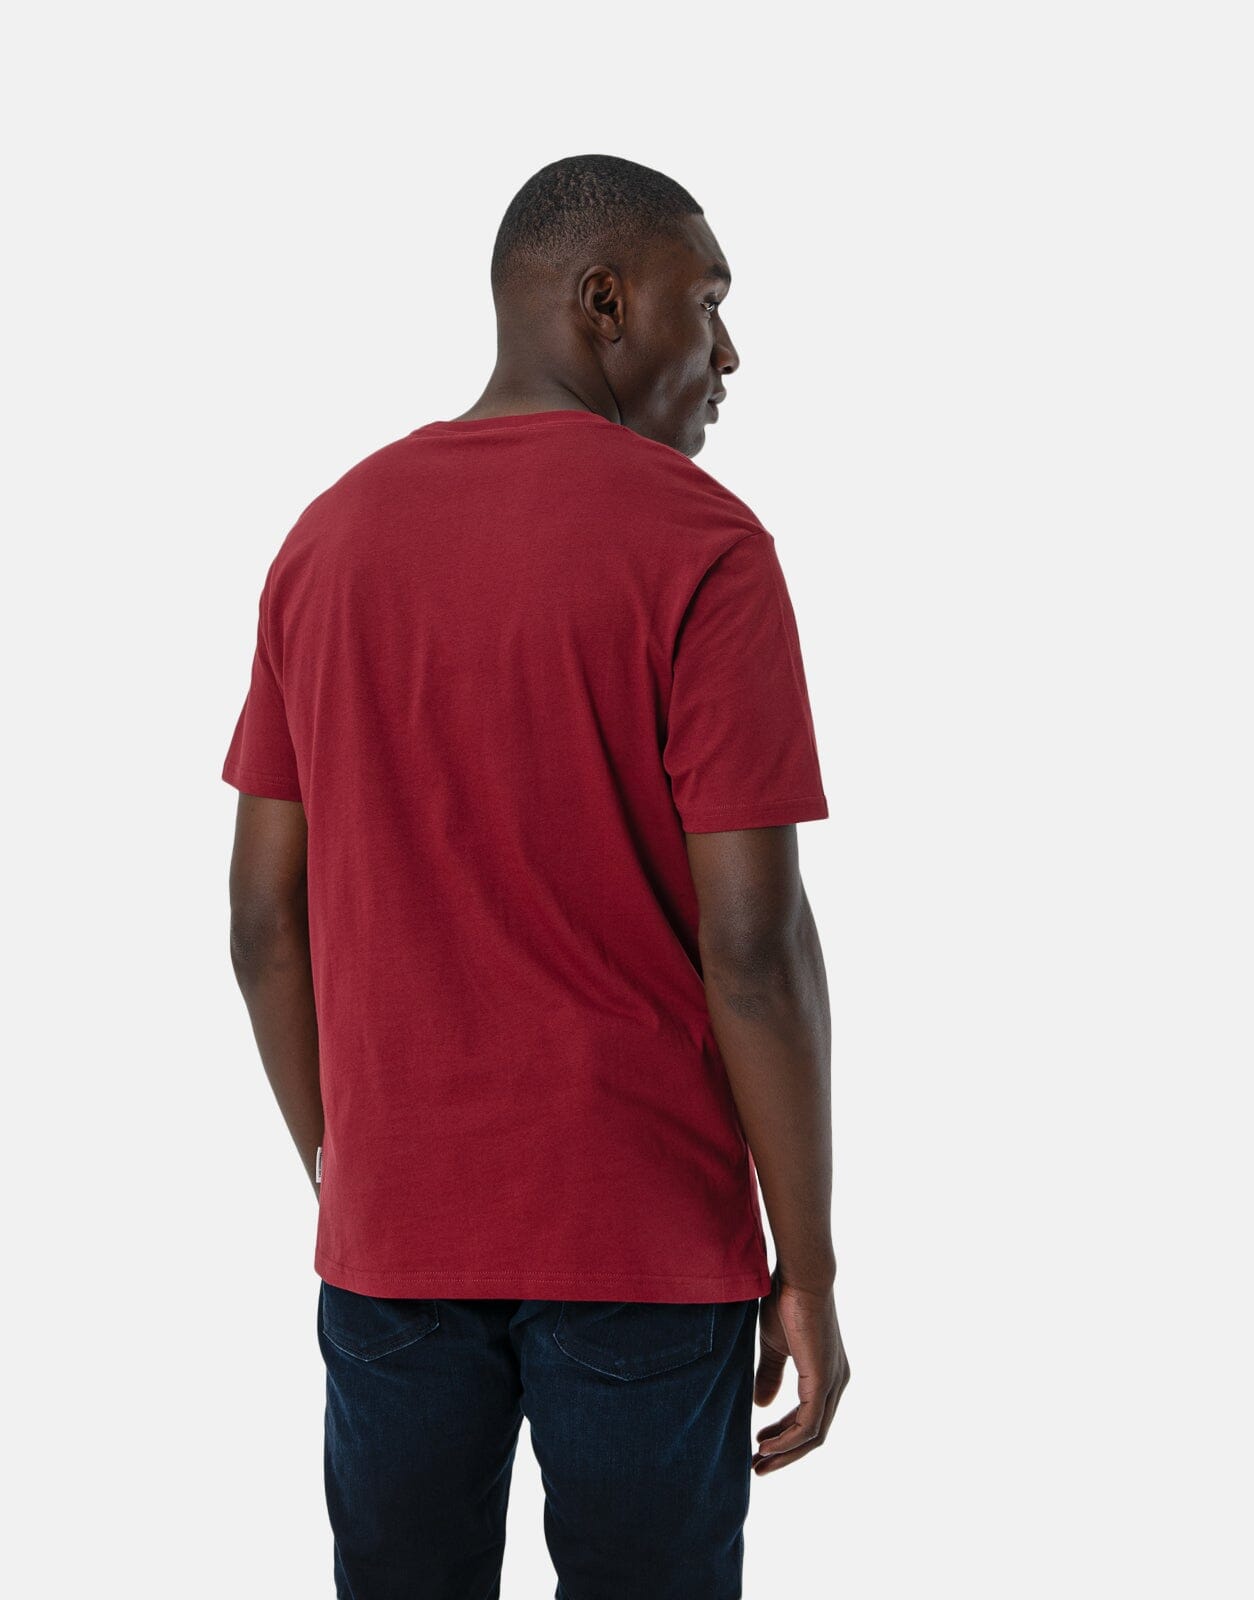 Ben Sherman Swirl Target Berry T-Shirt - Subwear